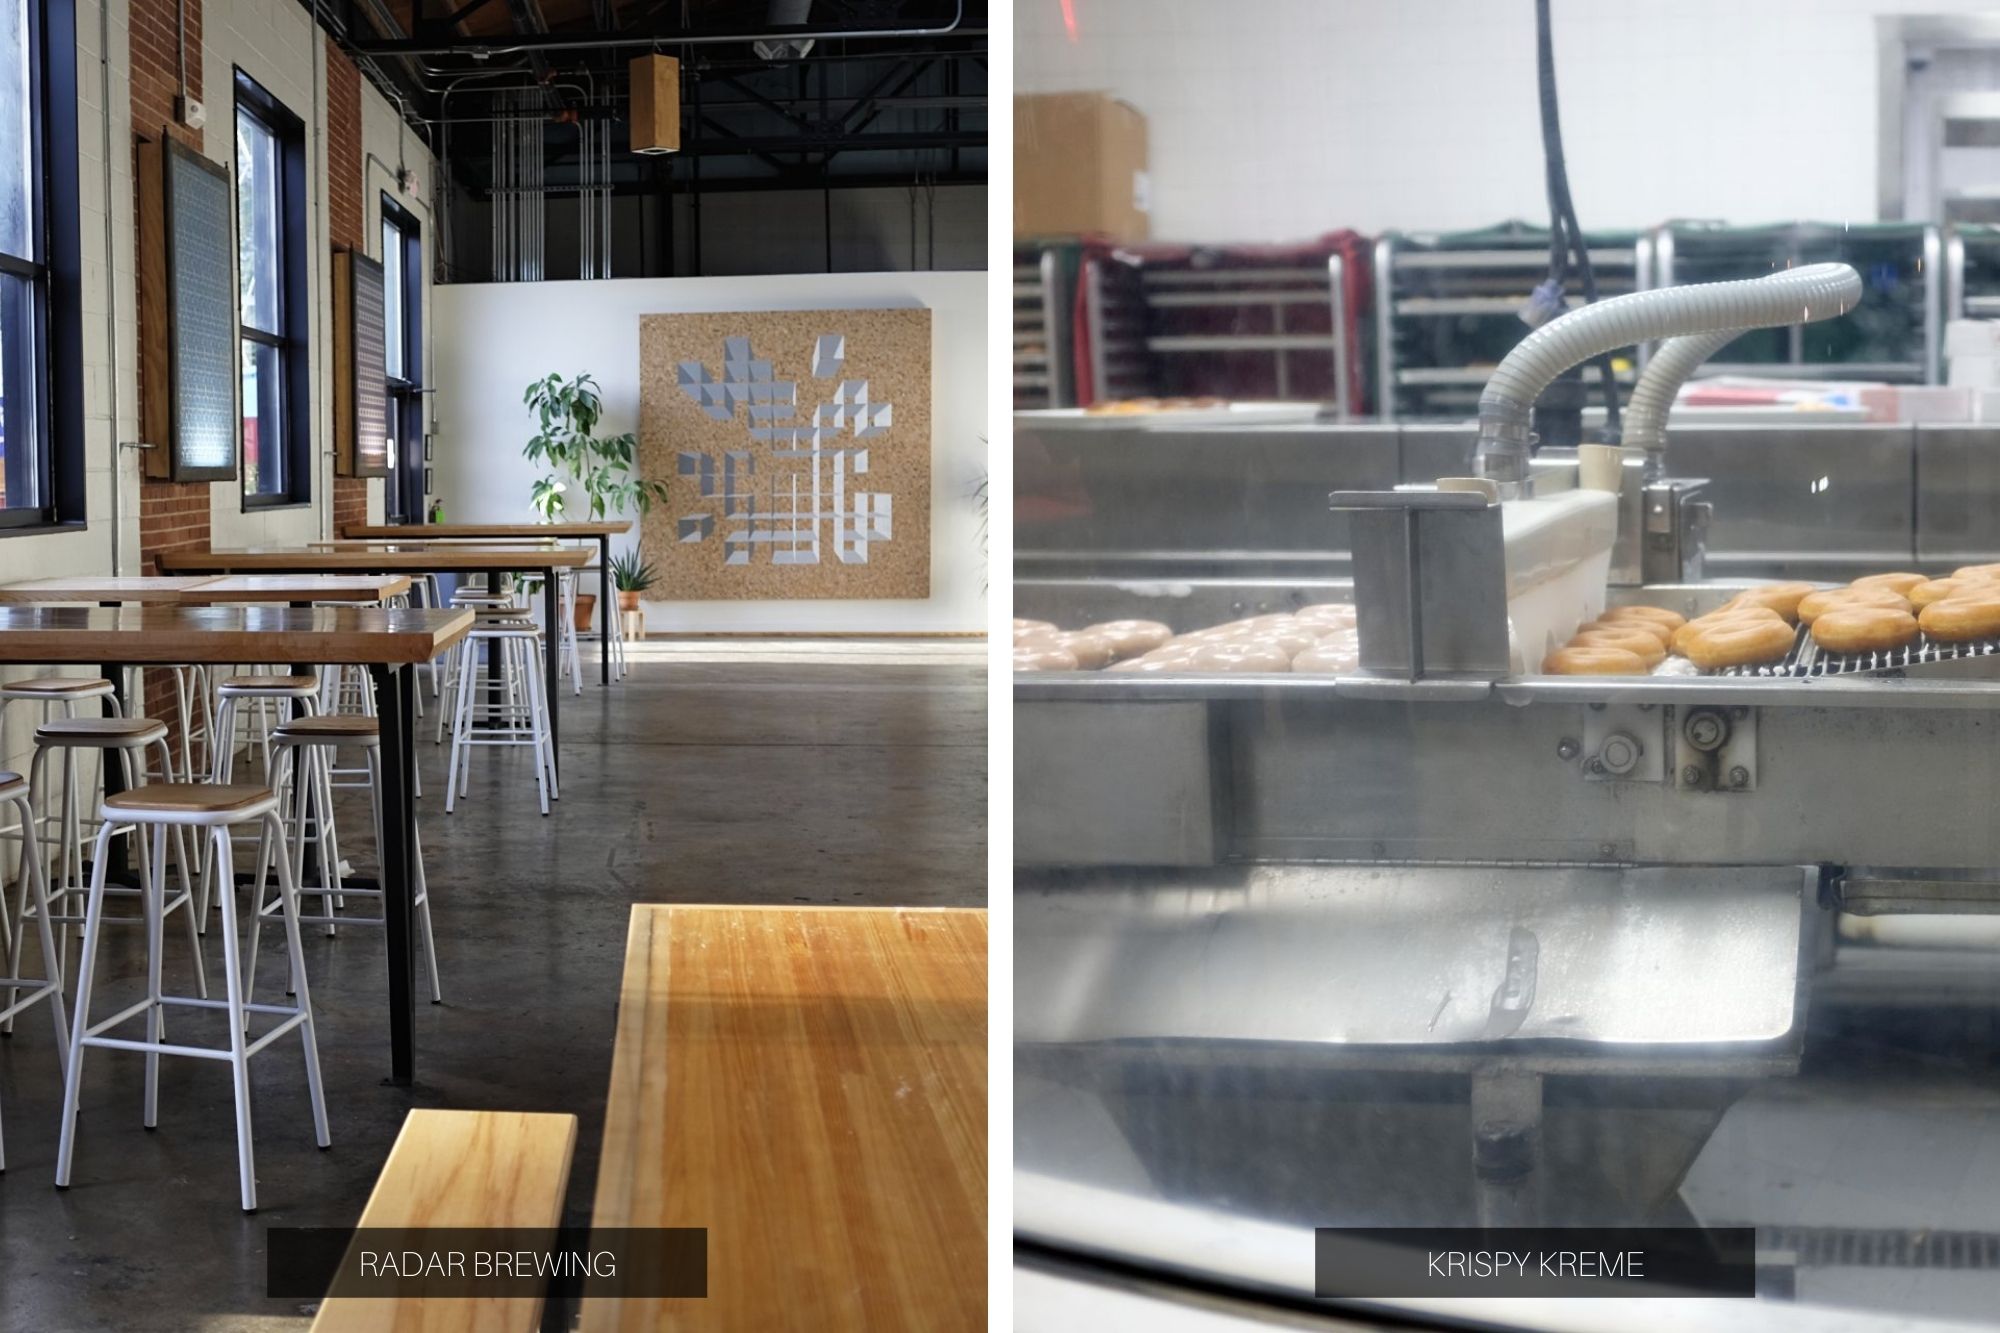 Collage: Radar Brewing interior, and Krispy Kreme production line